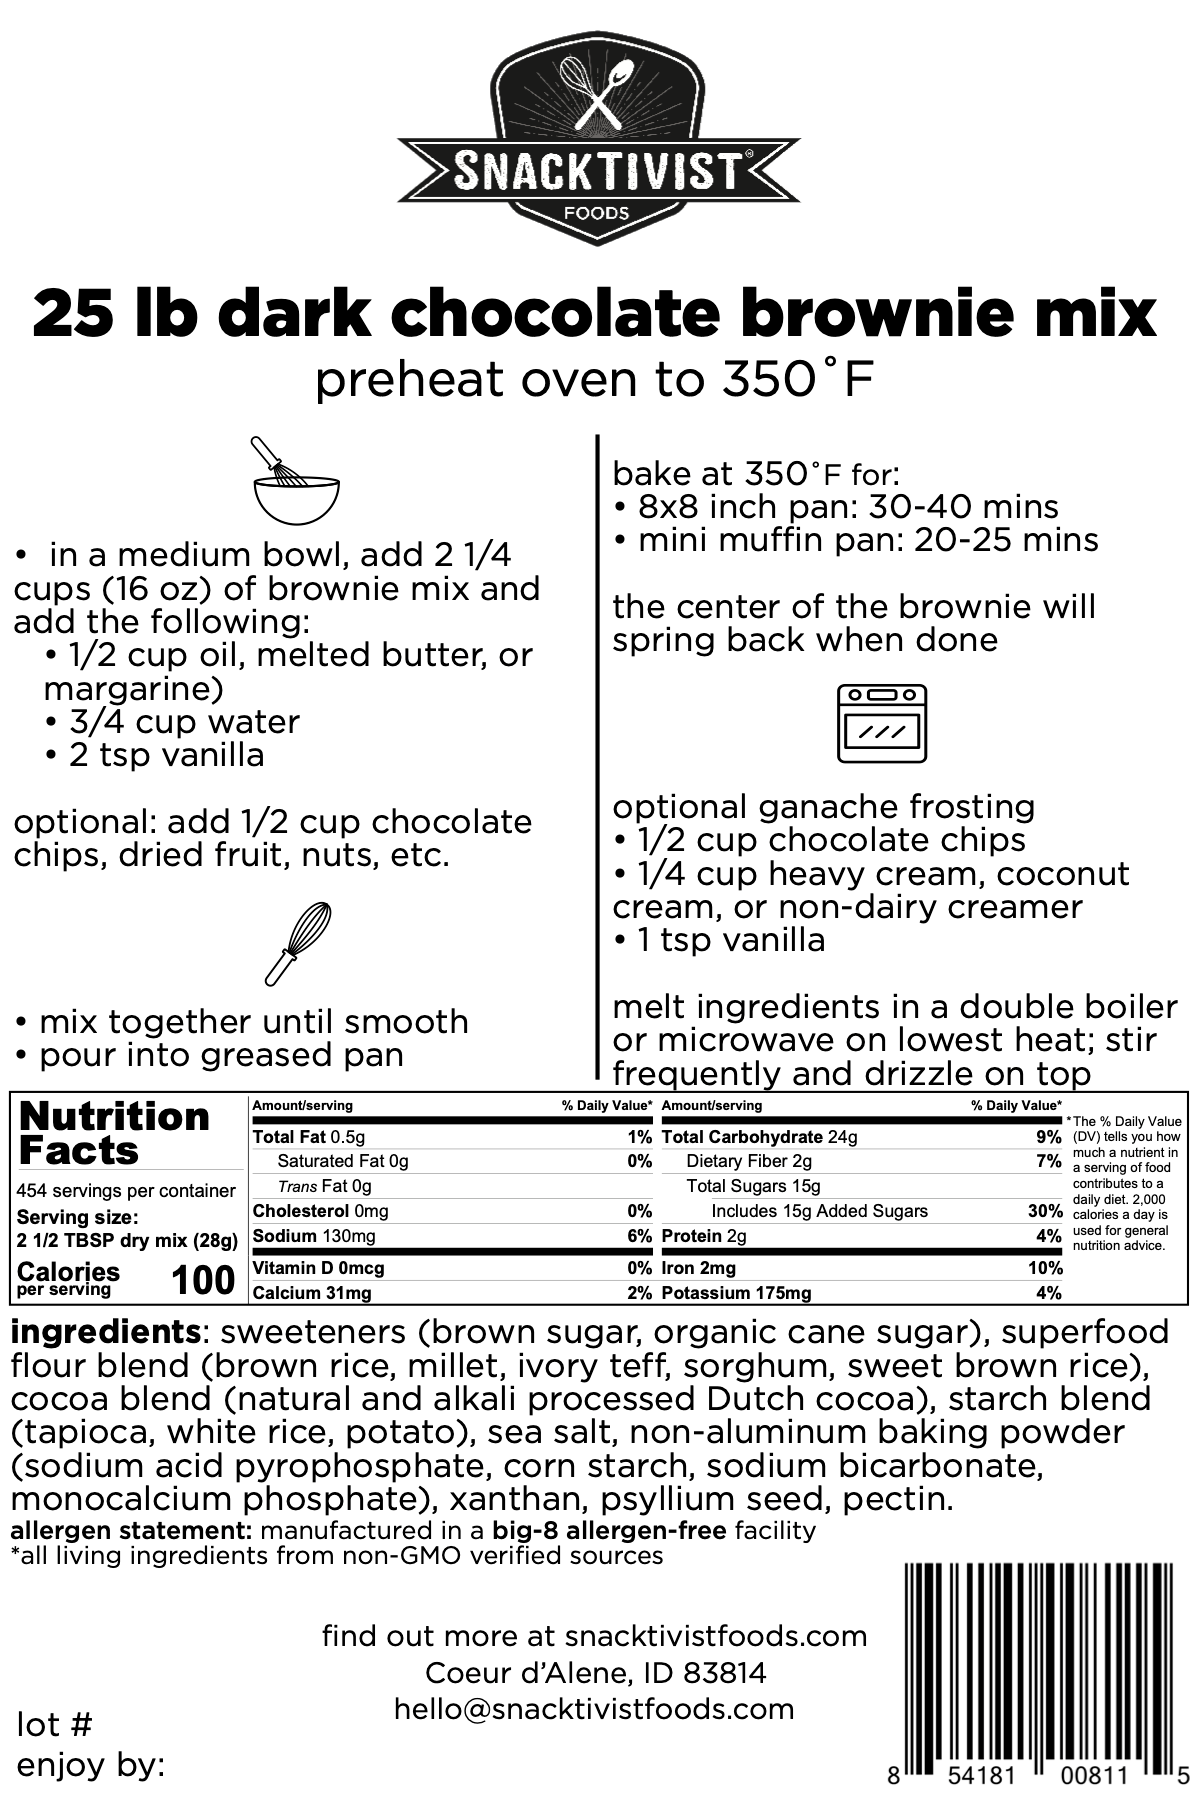 Premium Dark Chocolate Vanilla Buttercreams - 1 lb